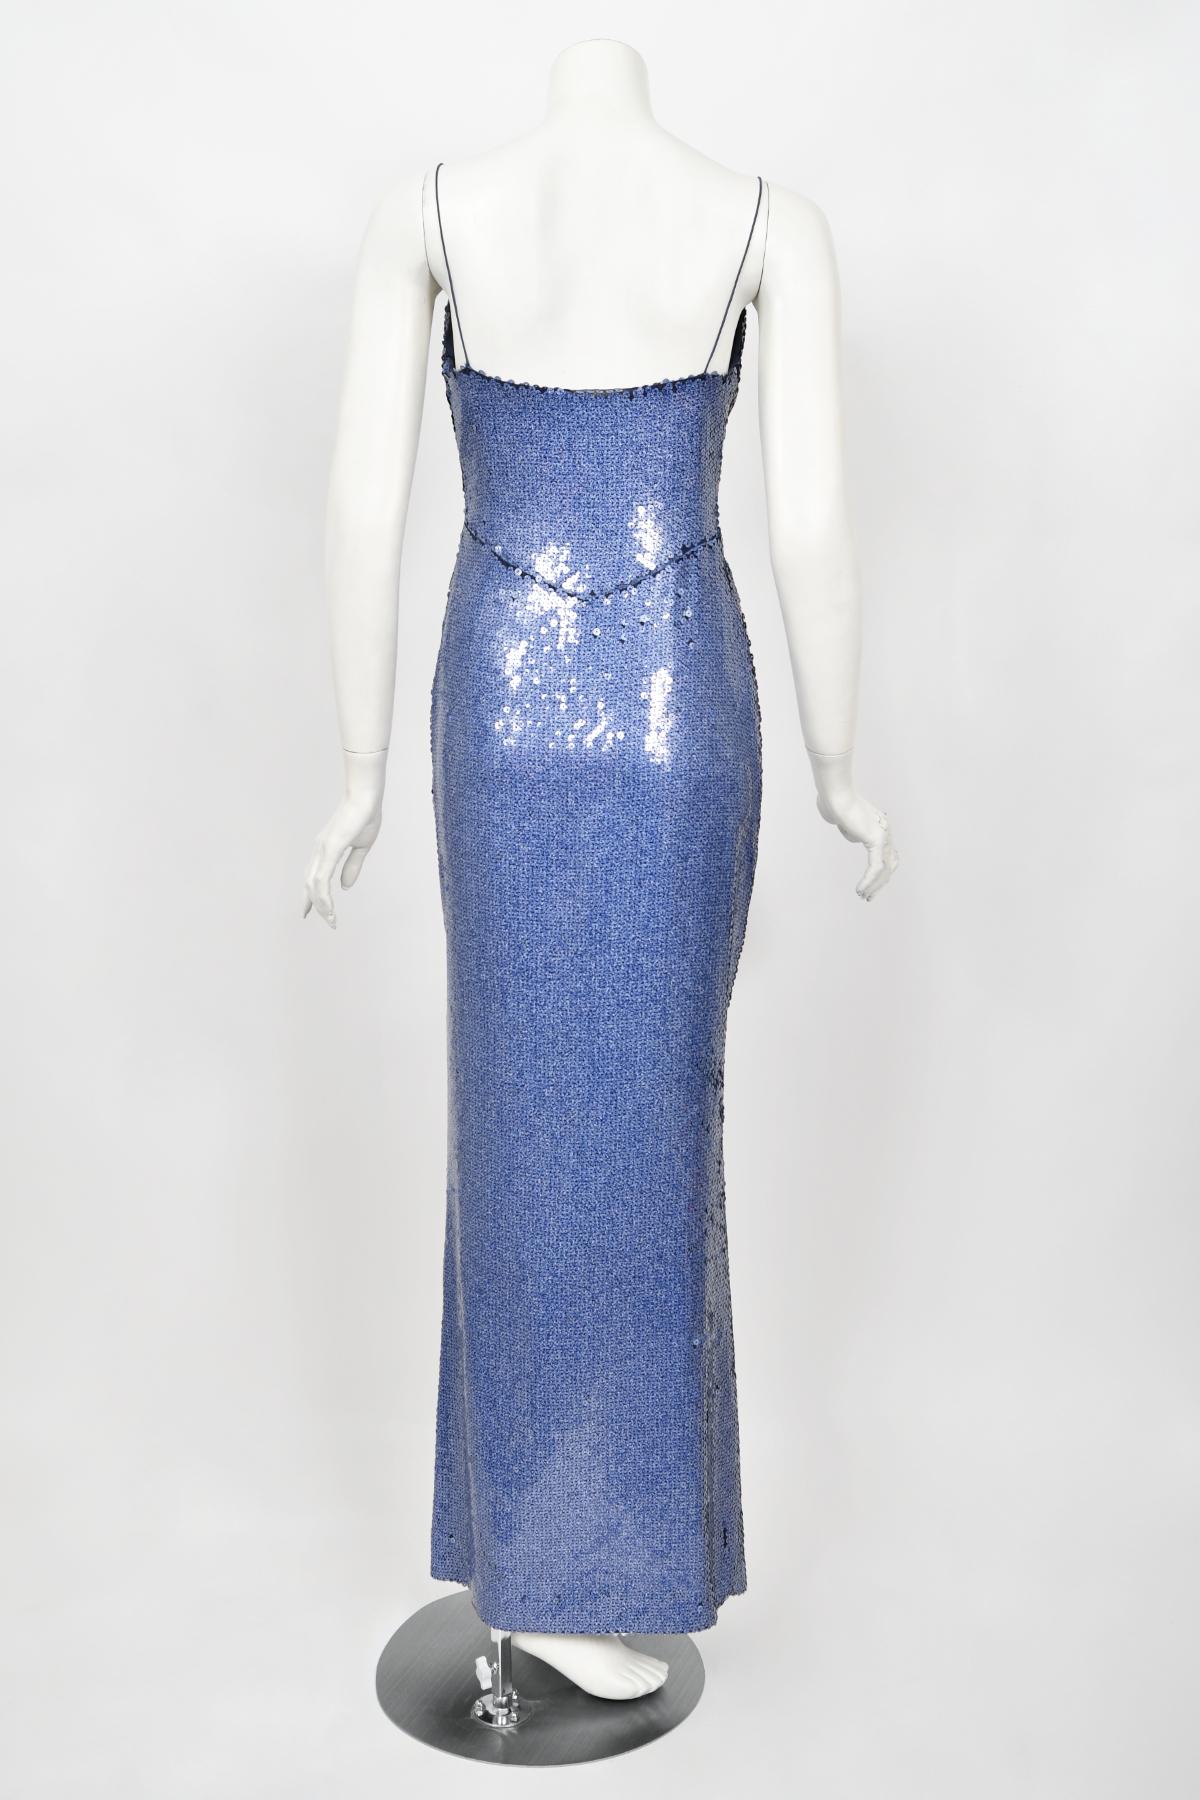 2000 Christian Dior by John Galliano Fully-Sequin Ocean Blue Bias-Cut Slip Gown  11